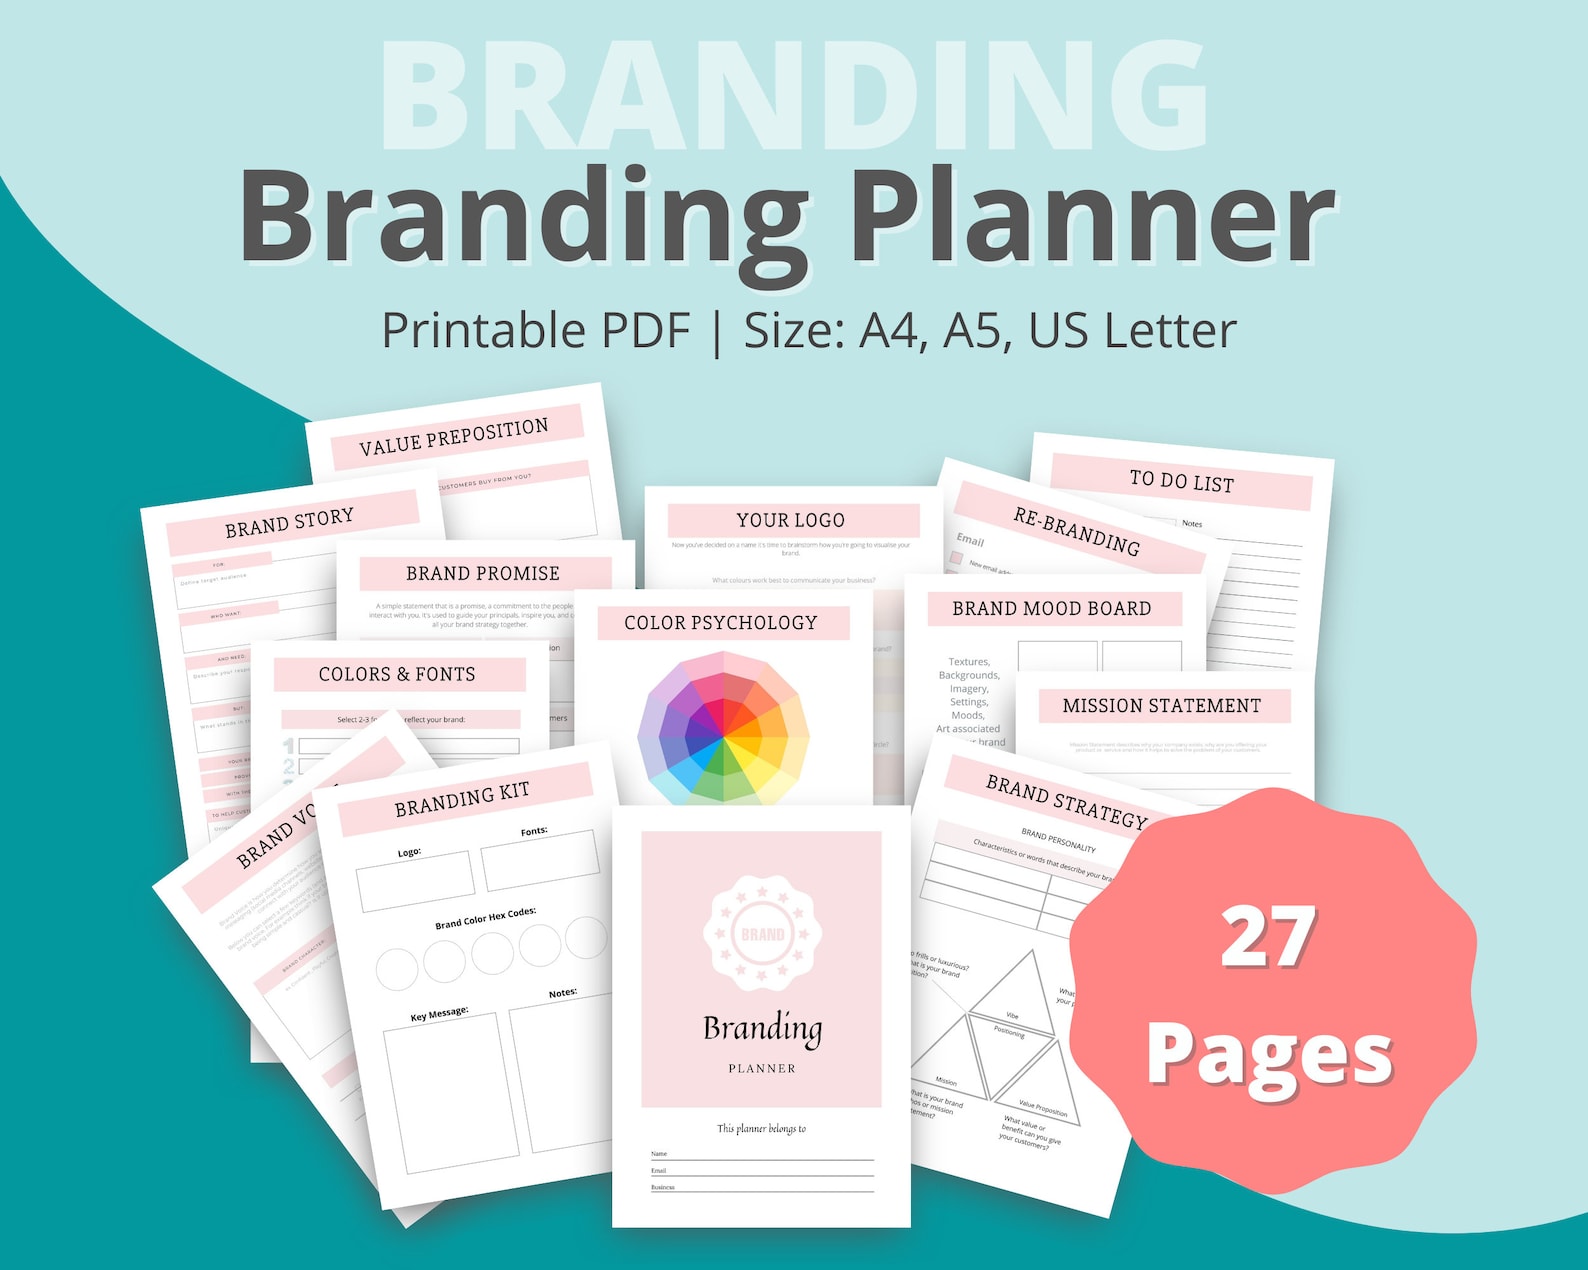 printing and branding business plan pdf